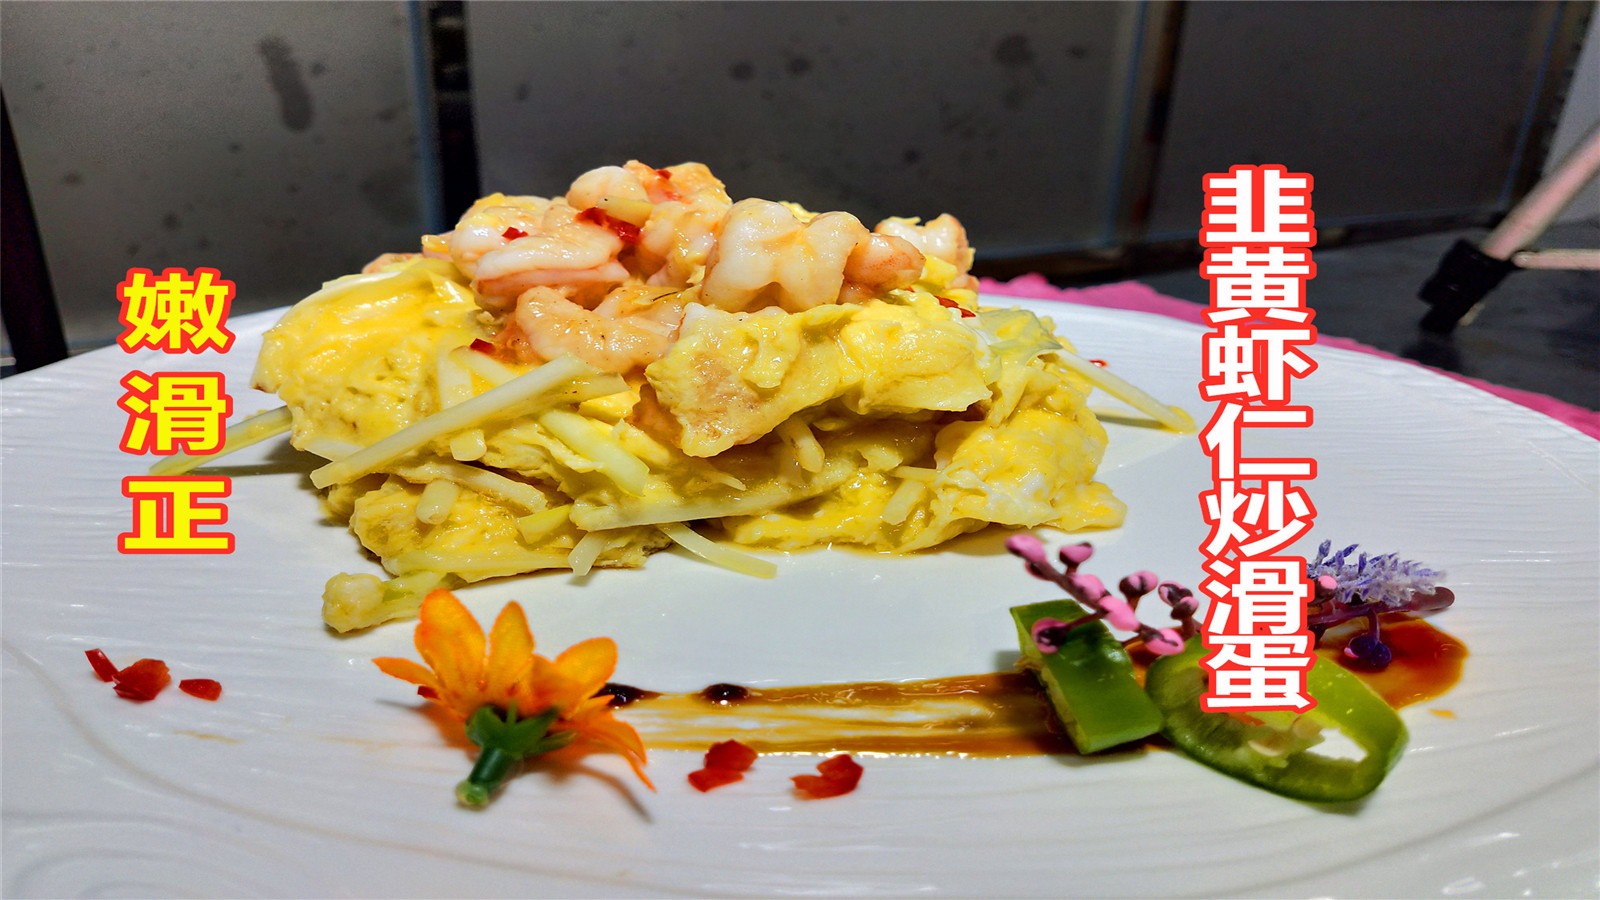 Chef shares Cantonese favorite "scrambled egg"! Shrimp Q-balls, soft eggs, you don't learn it?